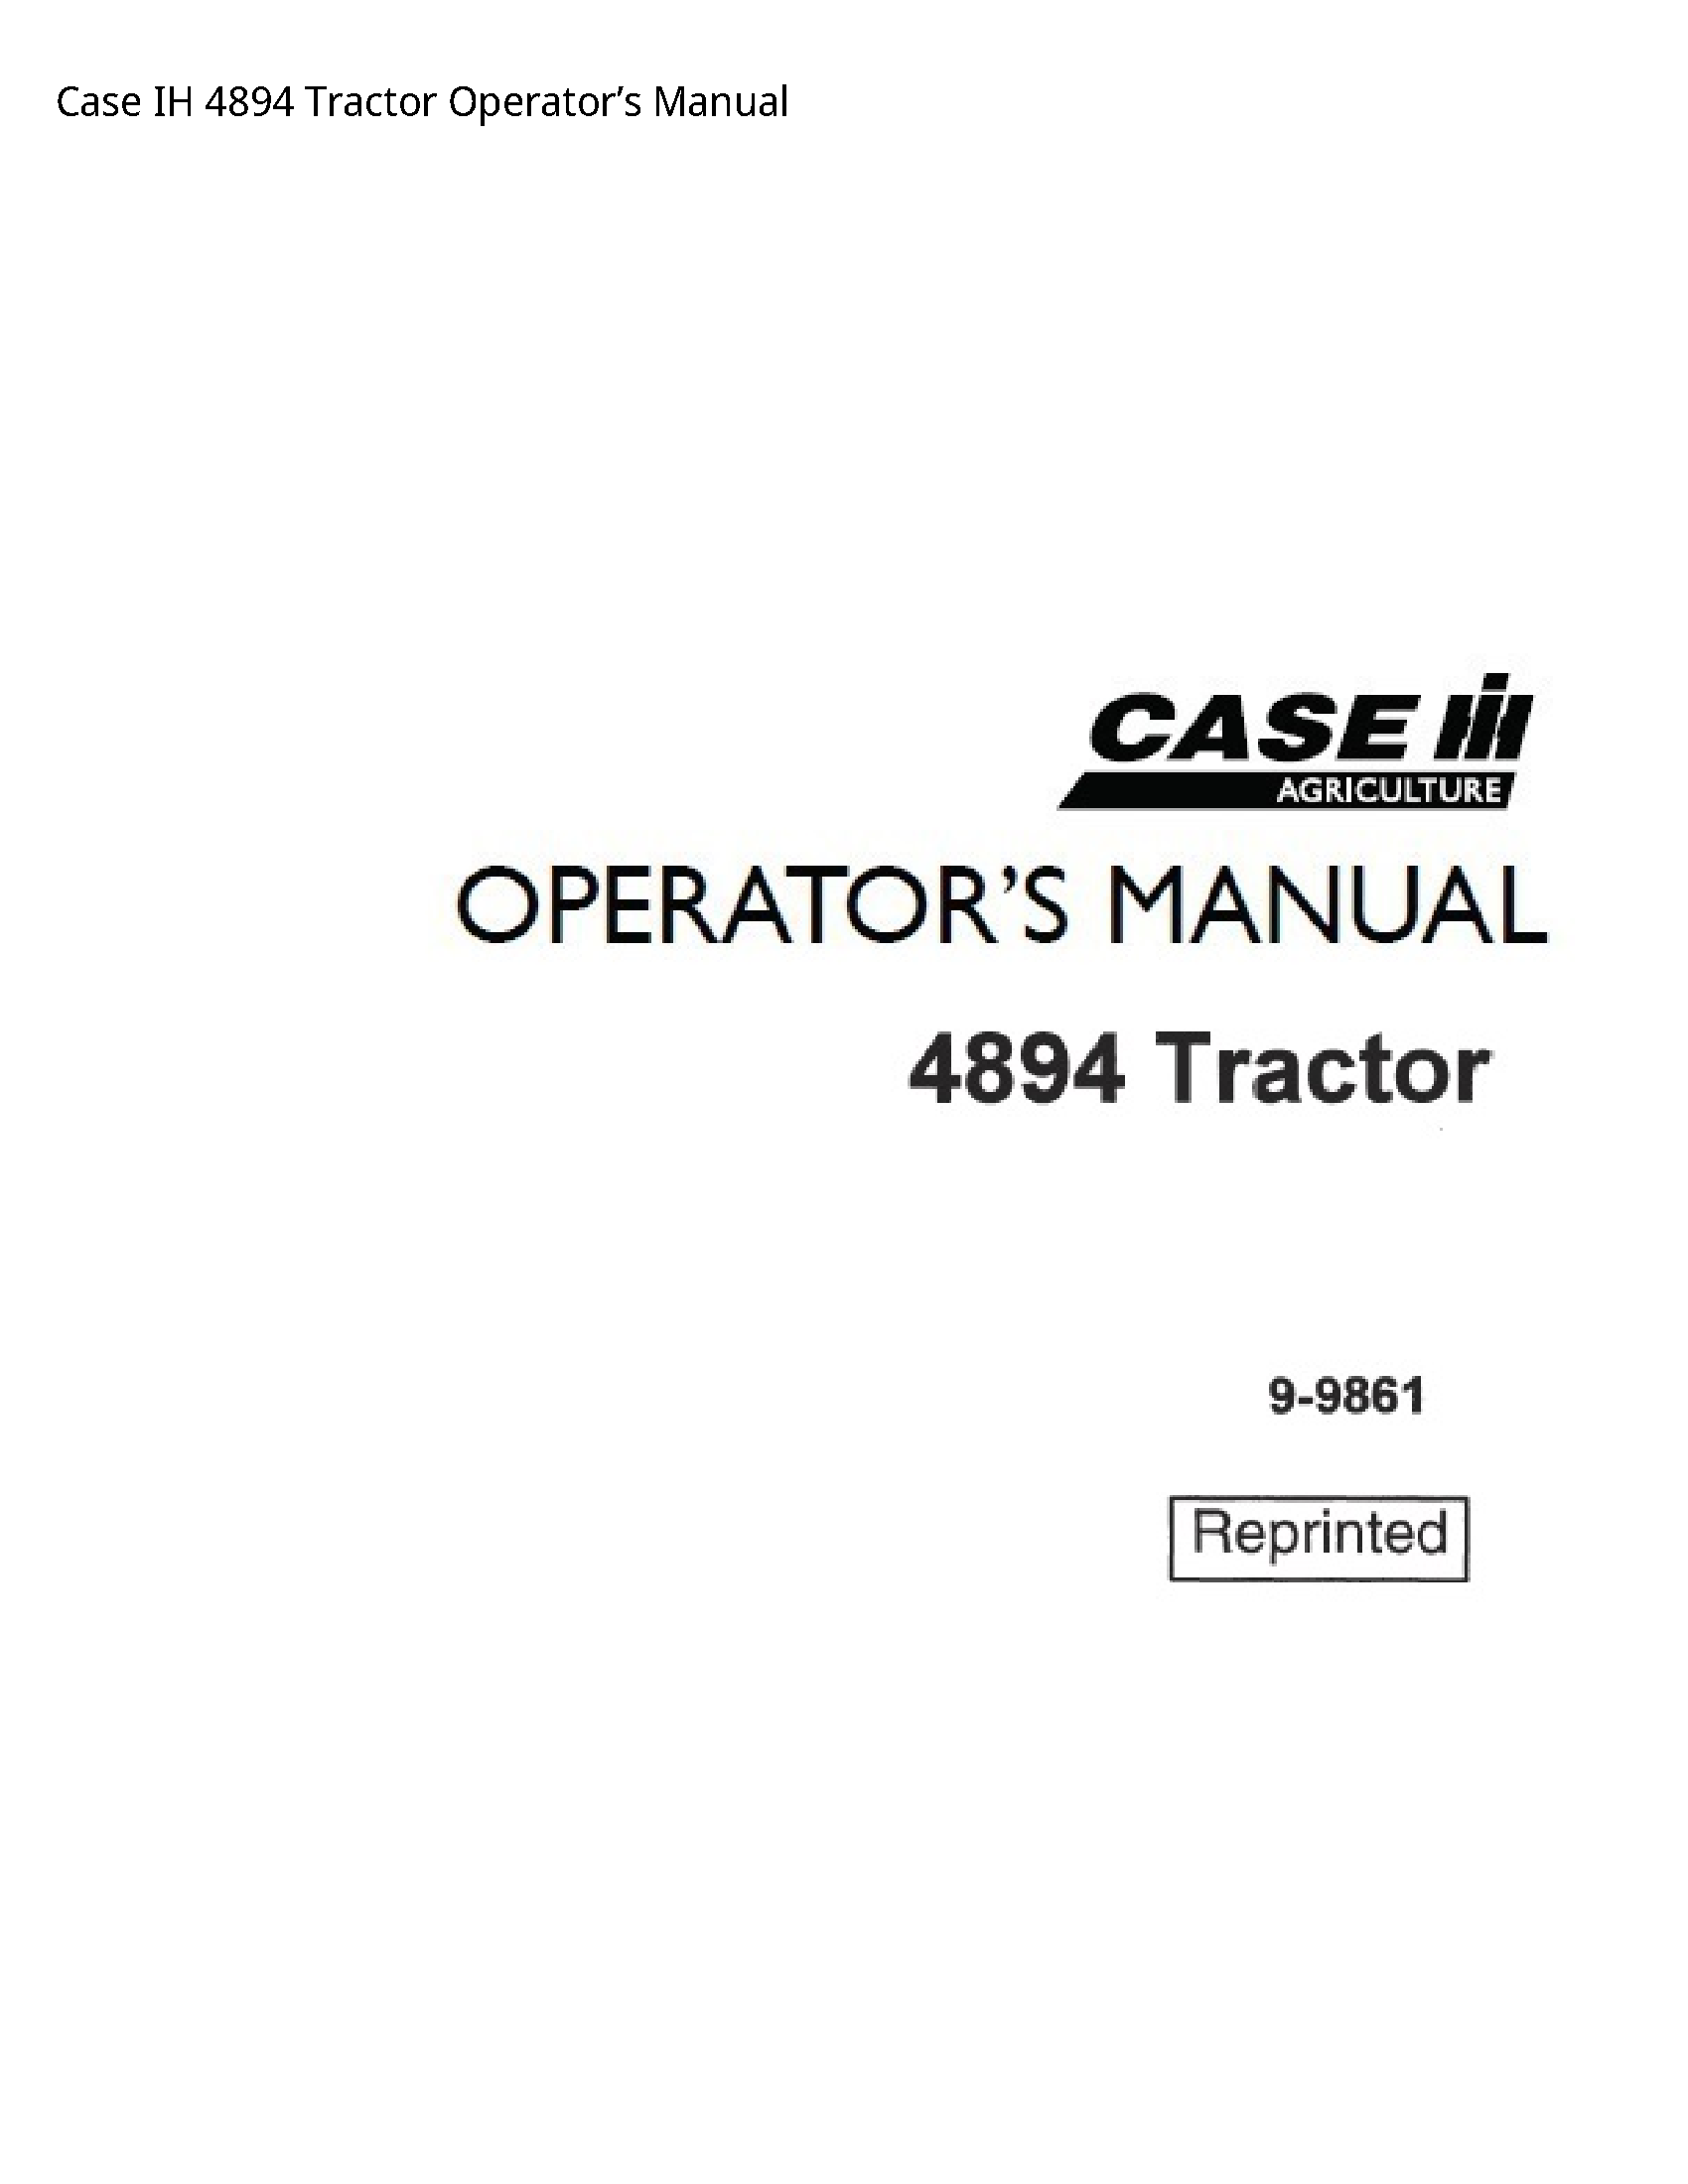 Case/Case IH 4894 IH Tractor Operator’s manual